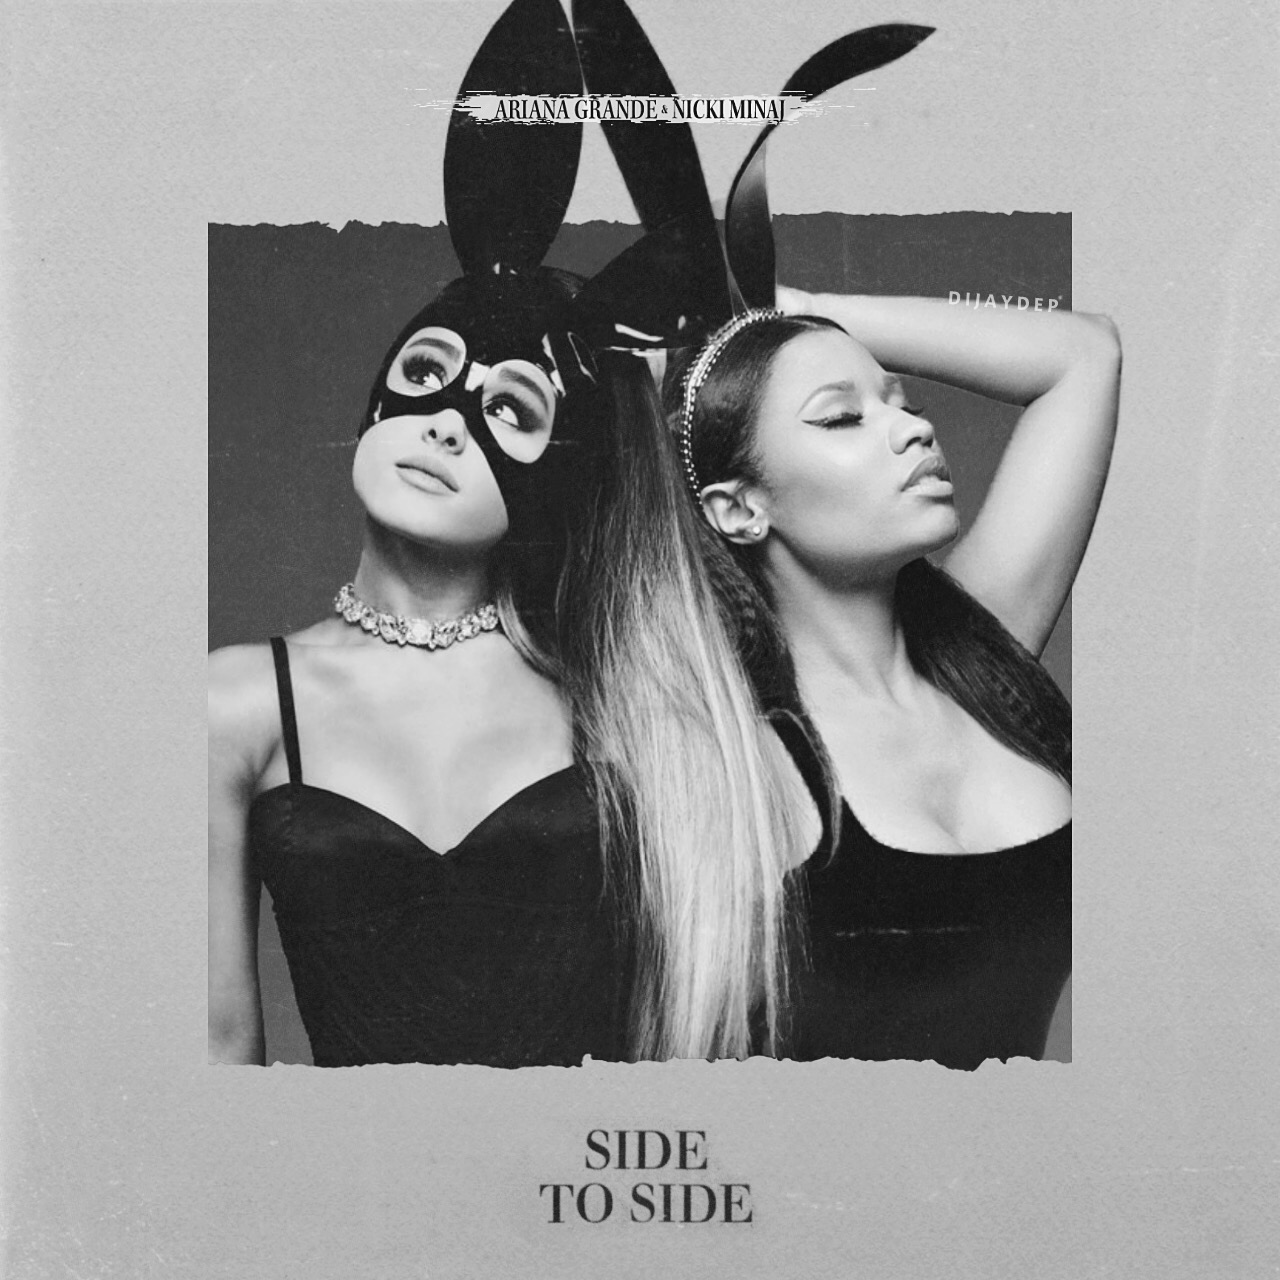 Ariana Grande Nicki Minaj Side to Side Album Cover for